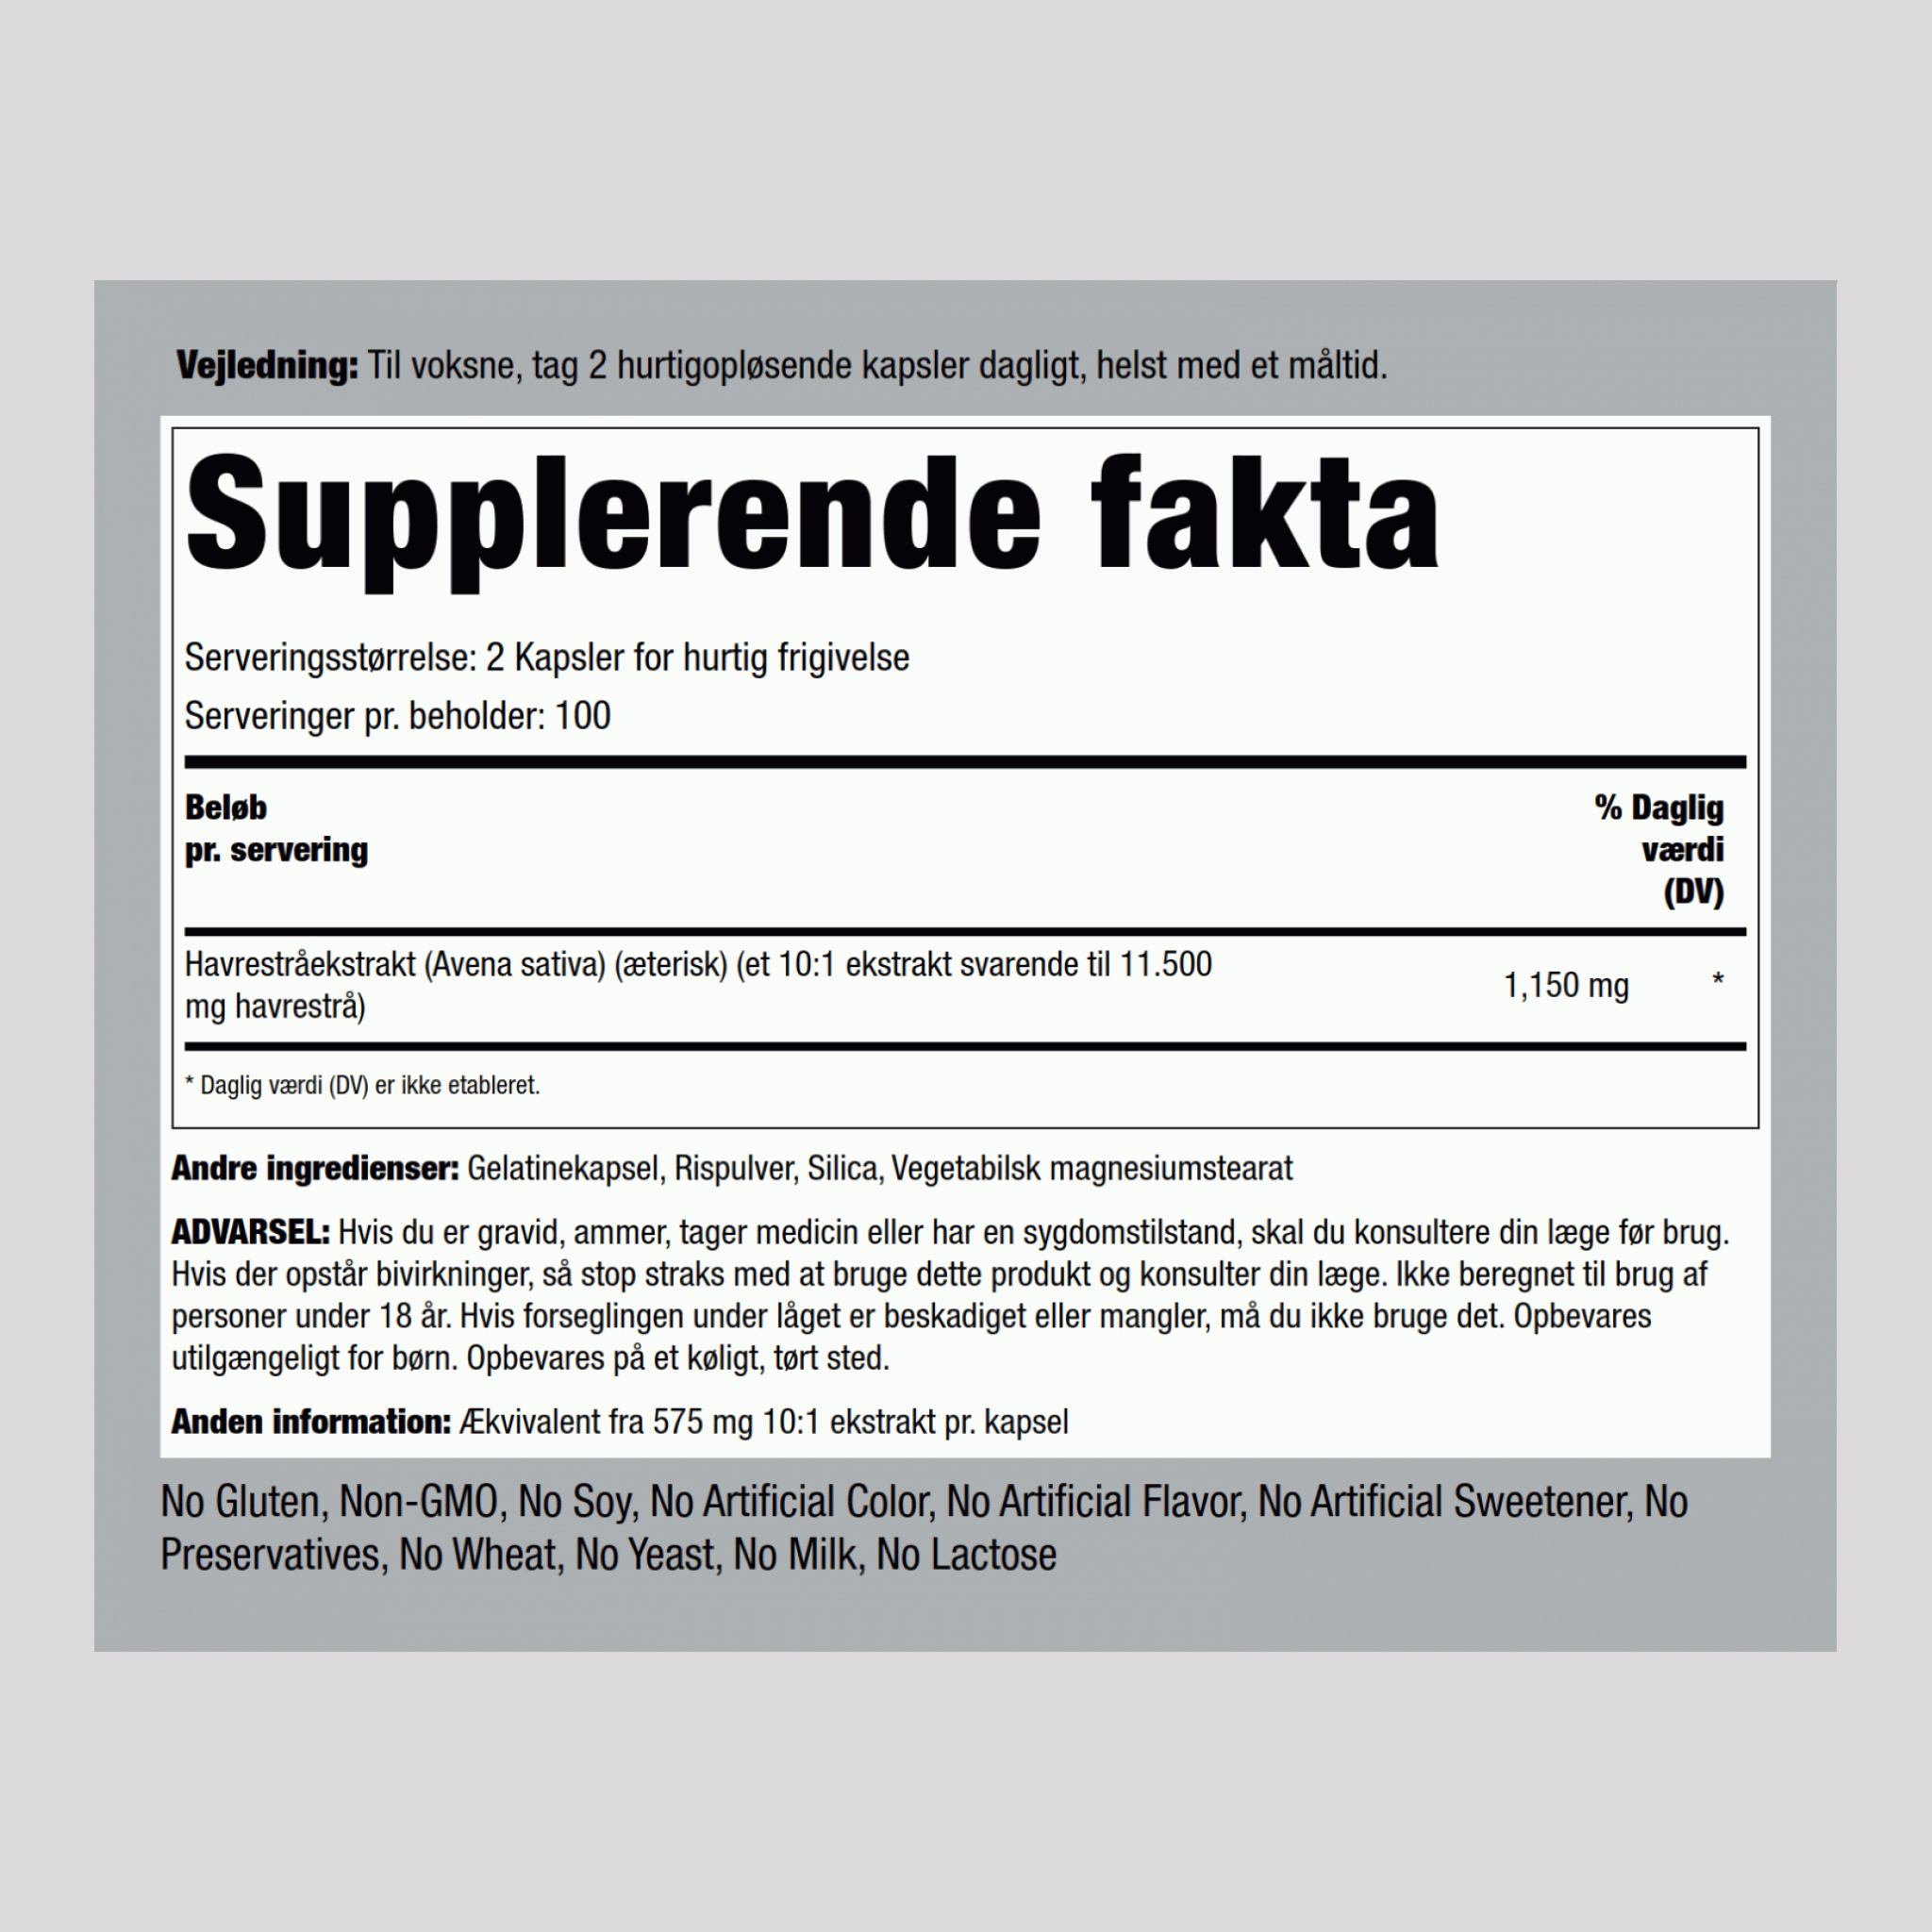 Avena Sativa Male Stamina Super Strength (Green Oat Grass), 1150 mg (per serving), 200 Quick Release Capsules, 2  Bottles